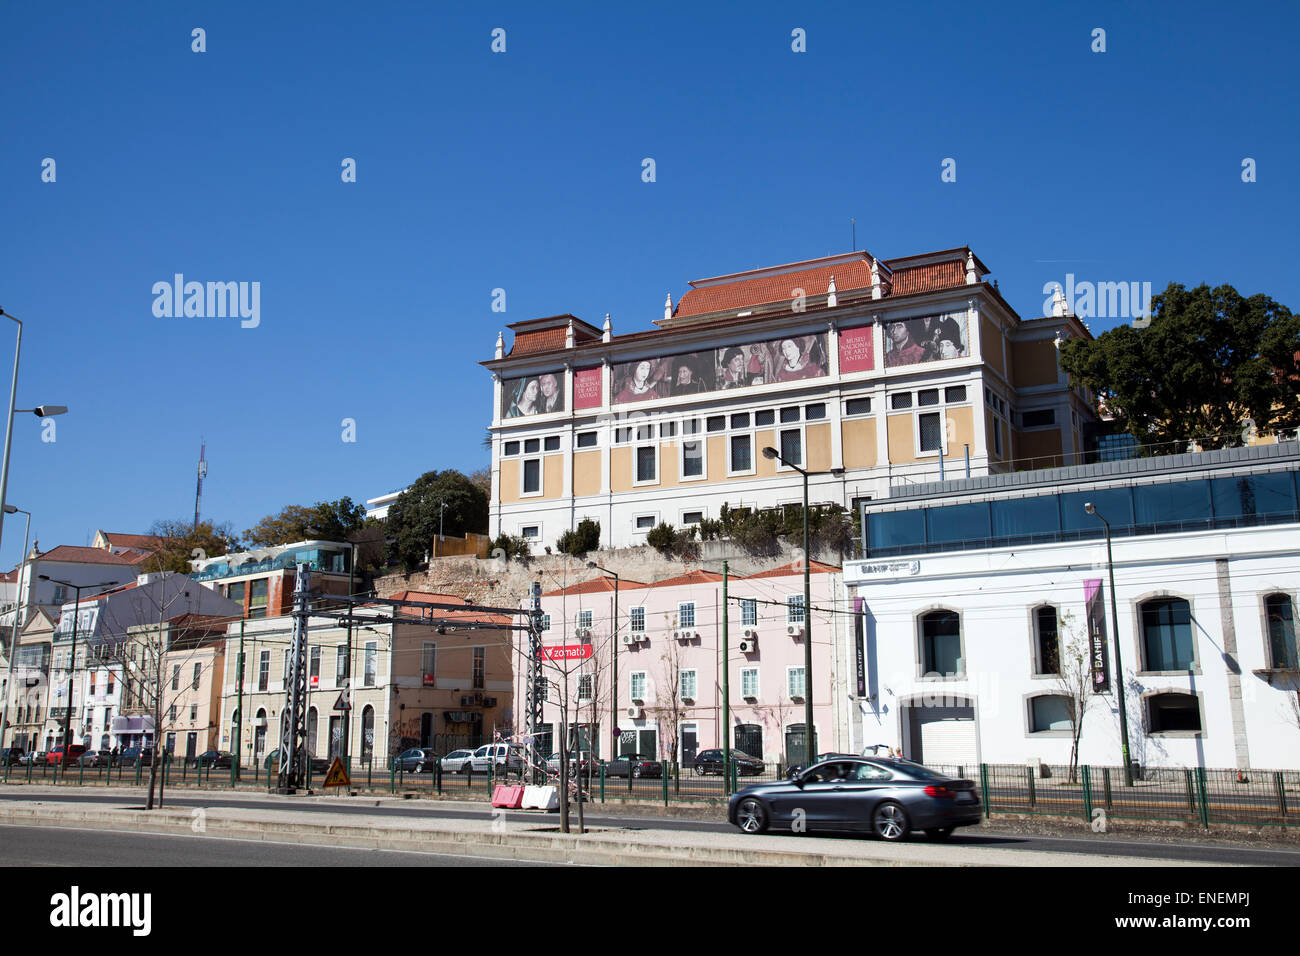 Museu Nacional de Arte Antiga avec Av. 24 de Julho en premier plan - Lisbonne - Portugal Banque D'Images